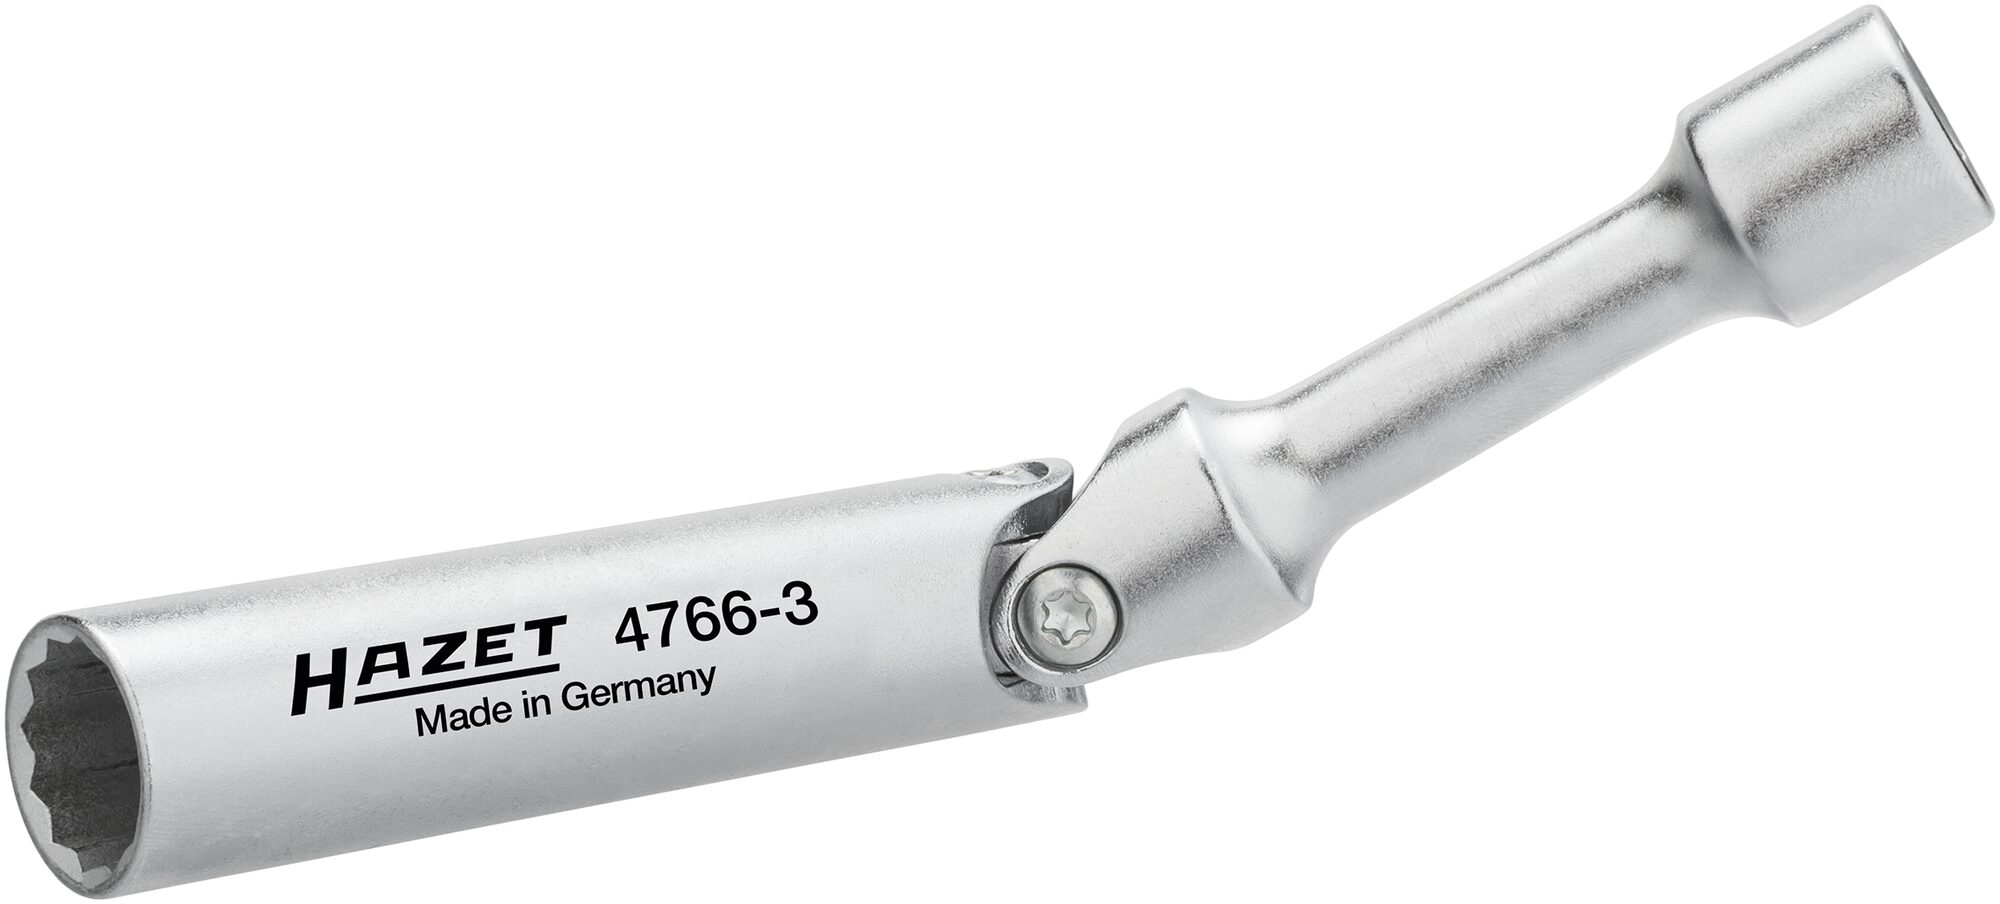 HAZET Zündkerzen-Schlüssel 4766-3 · Vierkant hohl 10 mm (3/8 Zoll) · Außen Doppel-Sechskant Profil · 14 mm